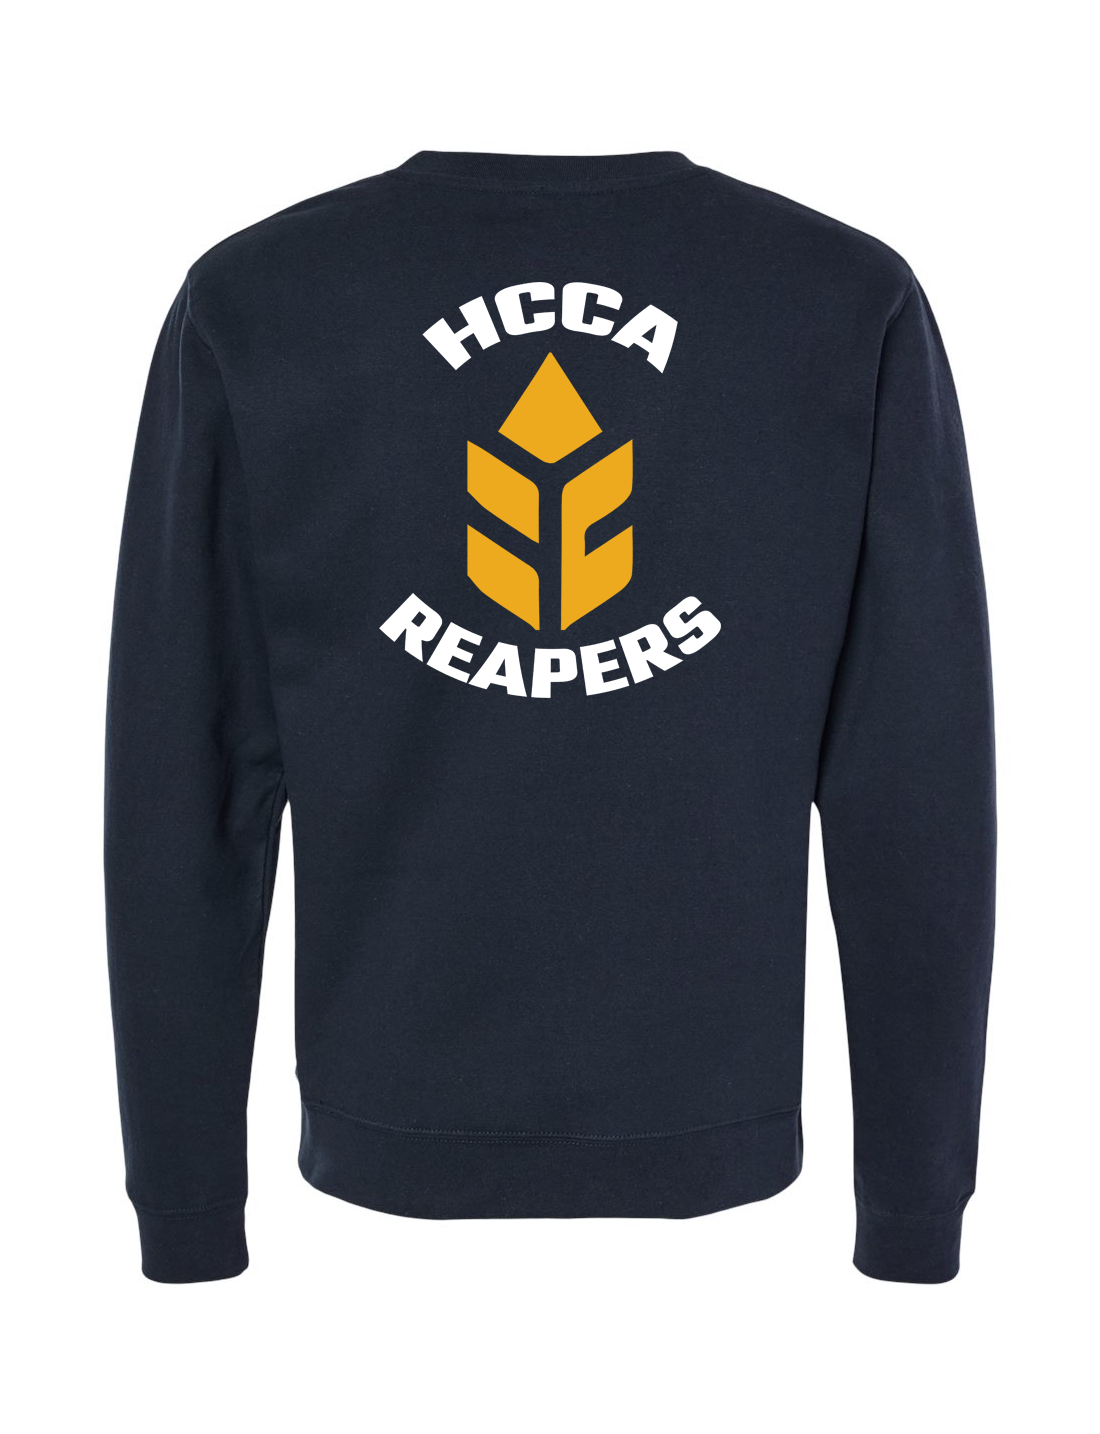 HCCA Reapers Crewneck